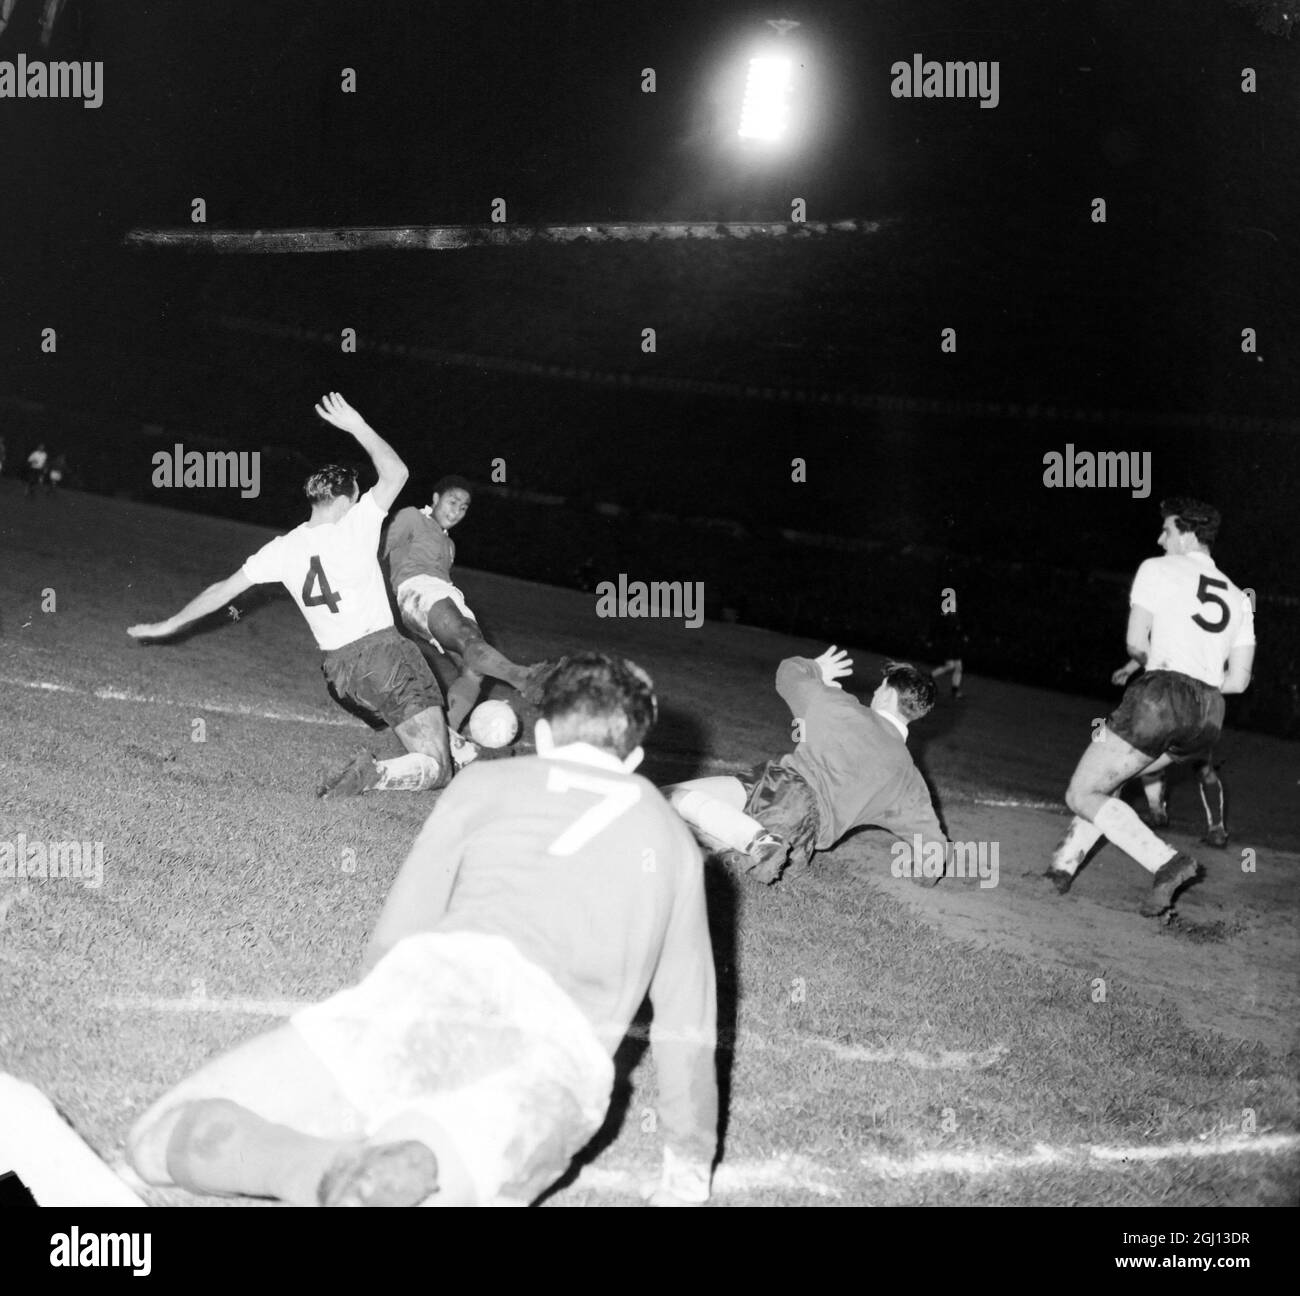 JOSE AUGUSTO IN AKTION - FUSSBALL-EUROPAMEISTERSCHAFT SPURS V BENFICA 22 MÄRZ 1962 Stockfoto